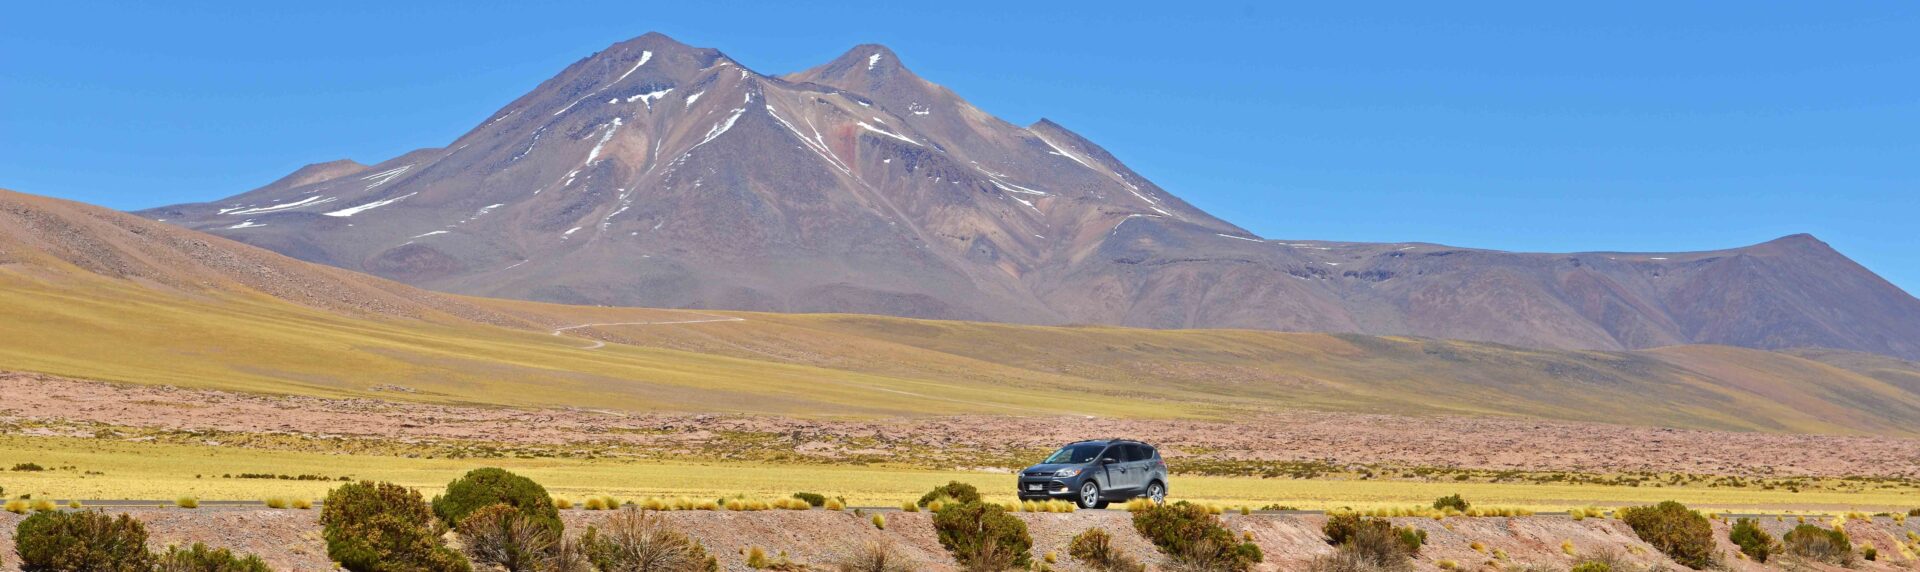 Atacama Chili Rondreis Pano 5005678